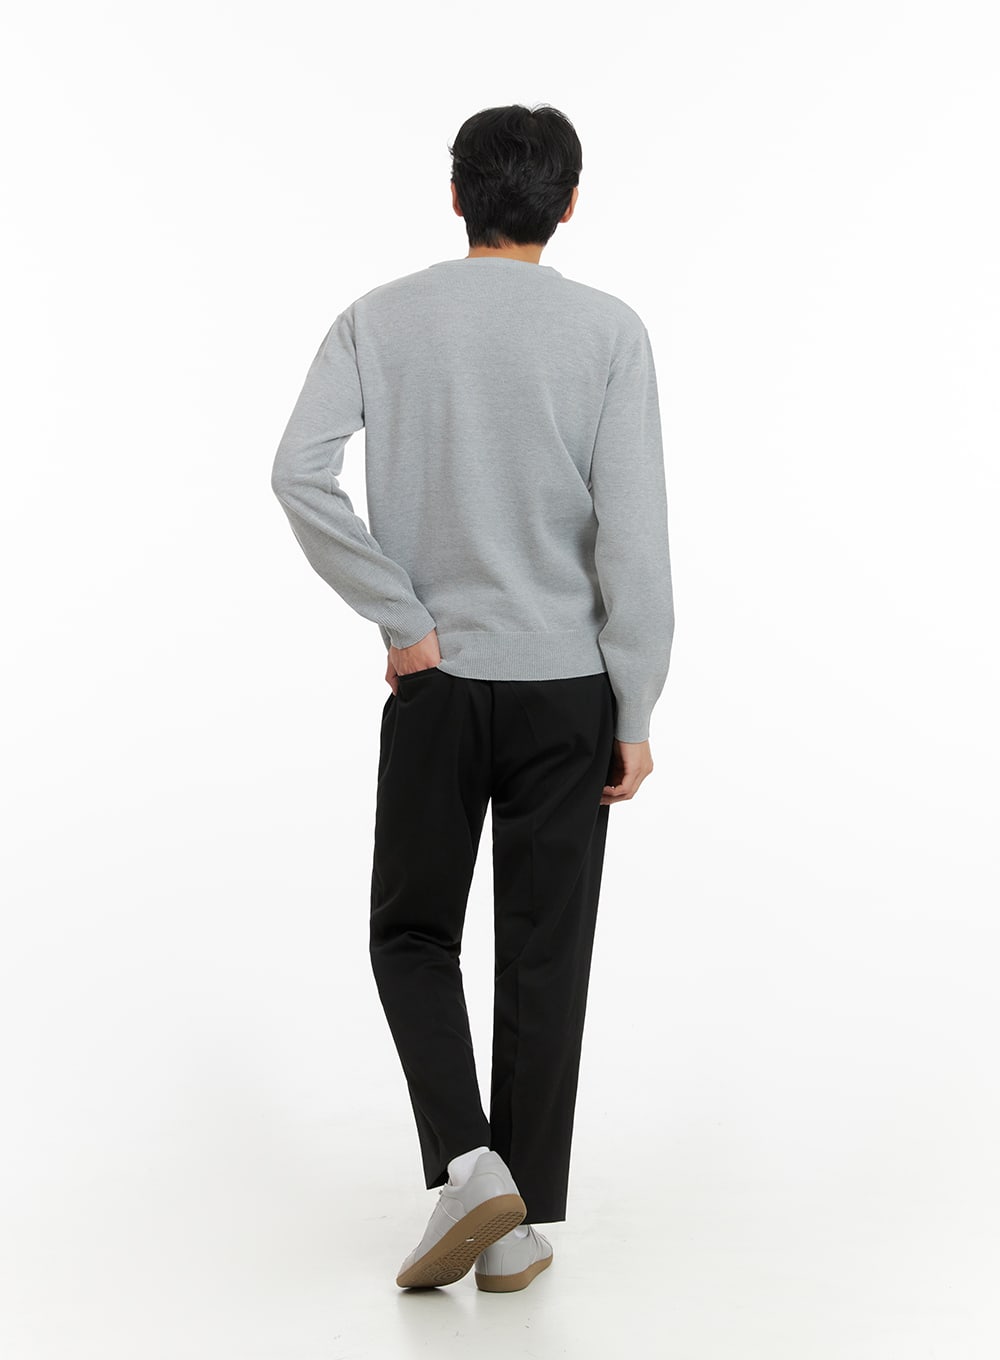 mens-basic-crew-neck-sweater-ia402